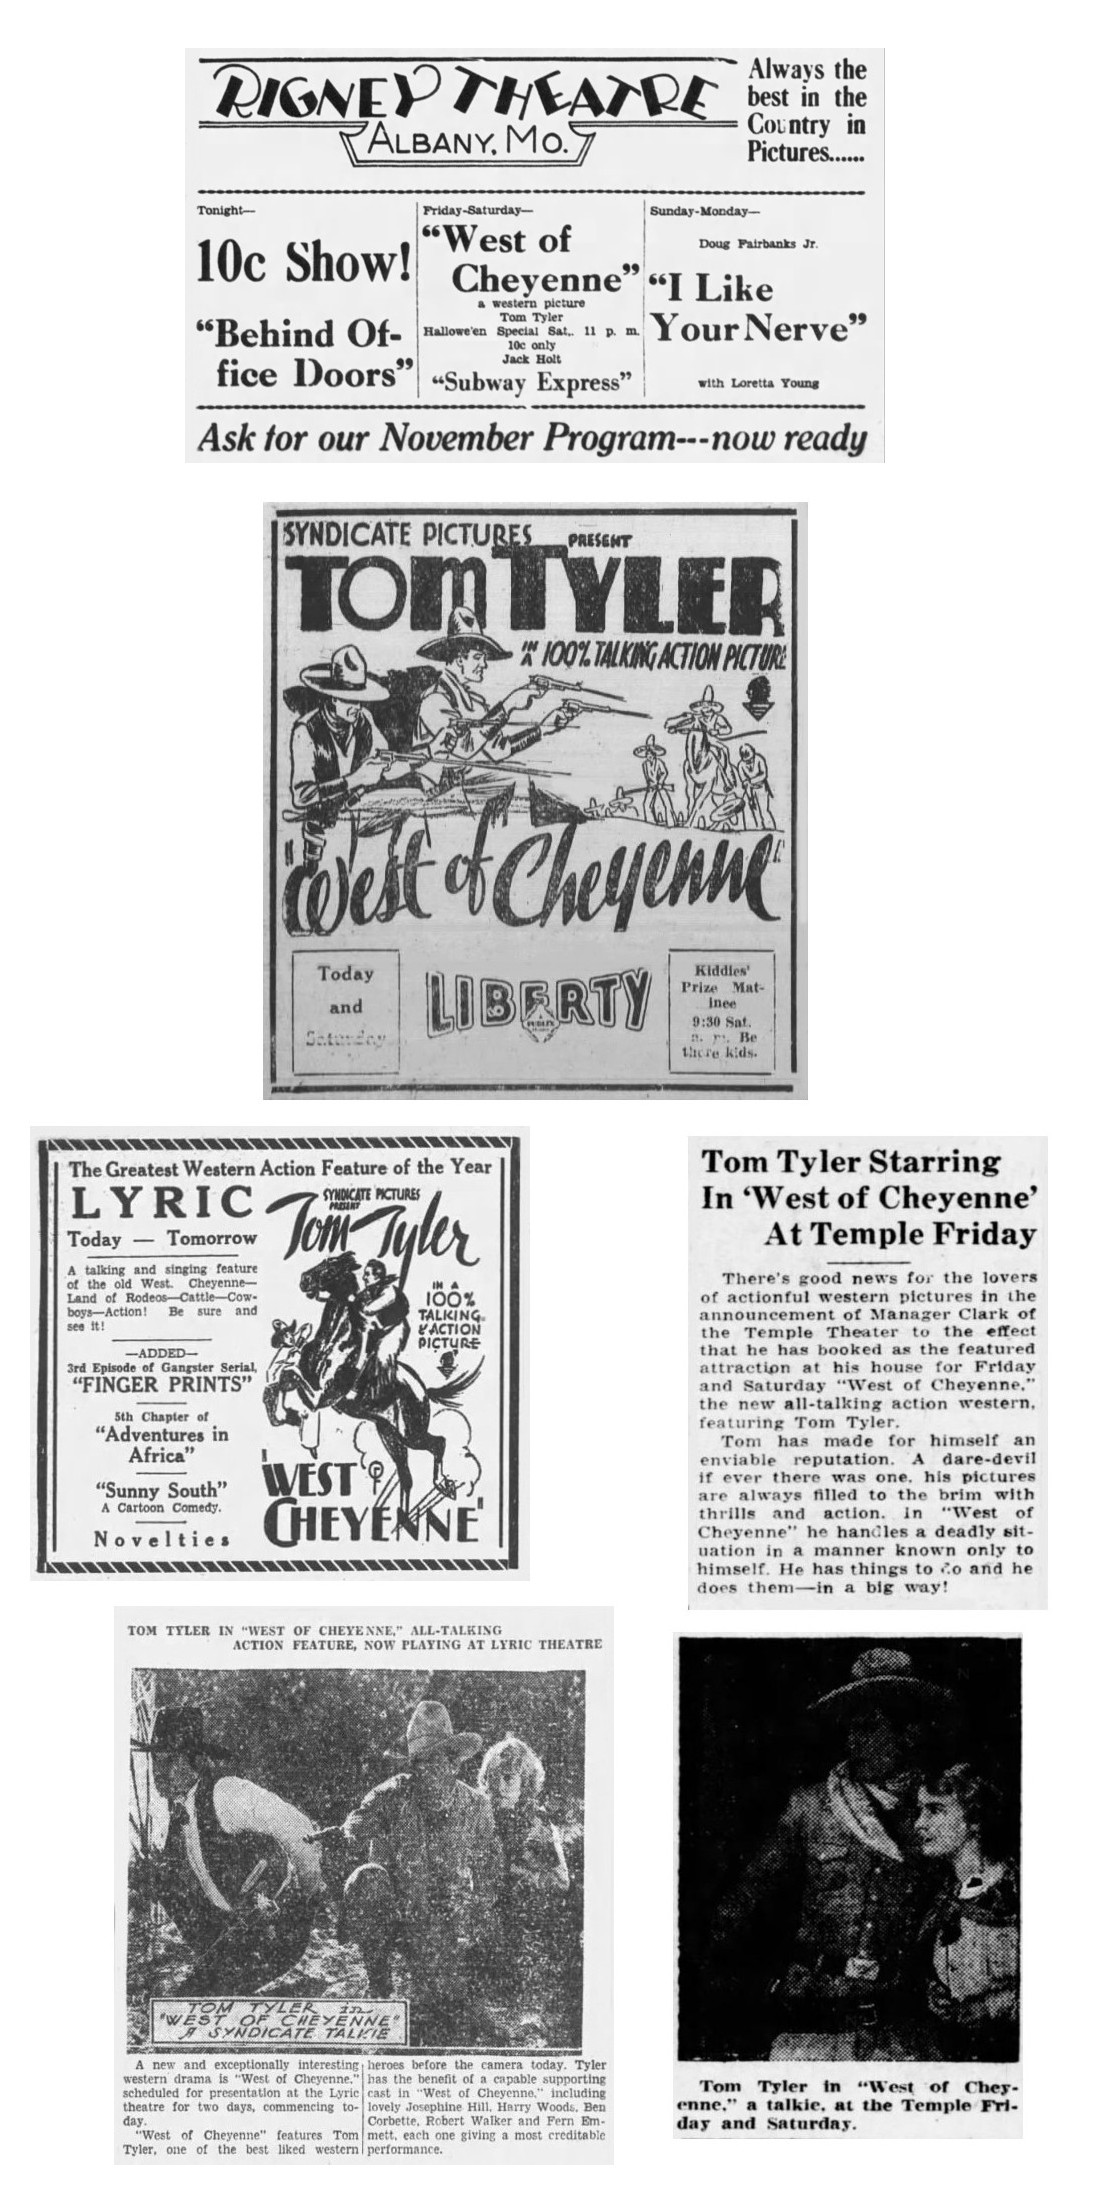 West of Cheyenne film reviews cinema ads